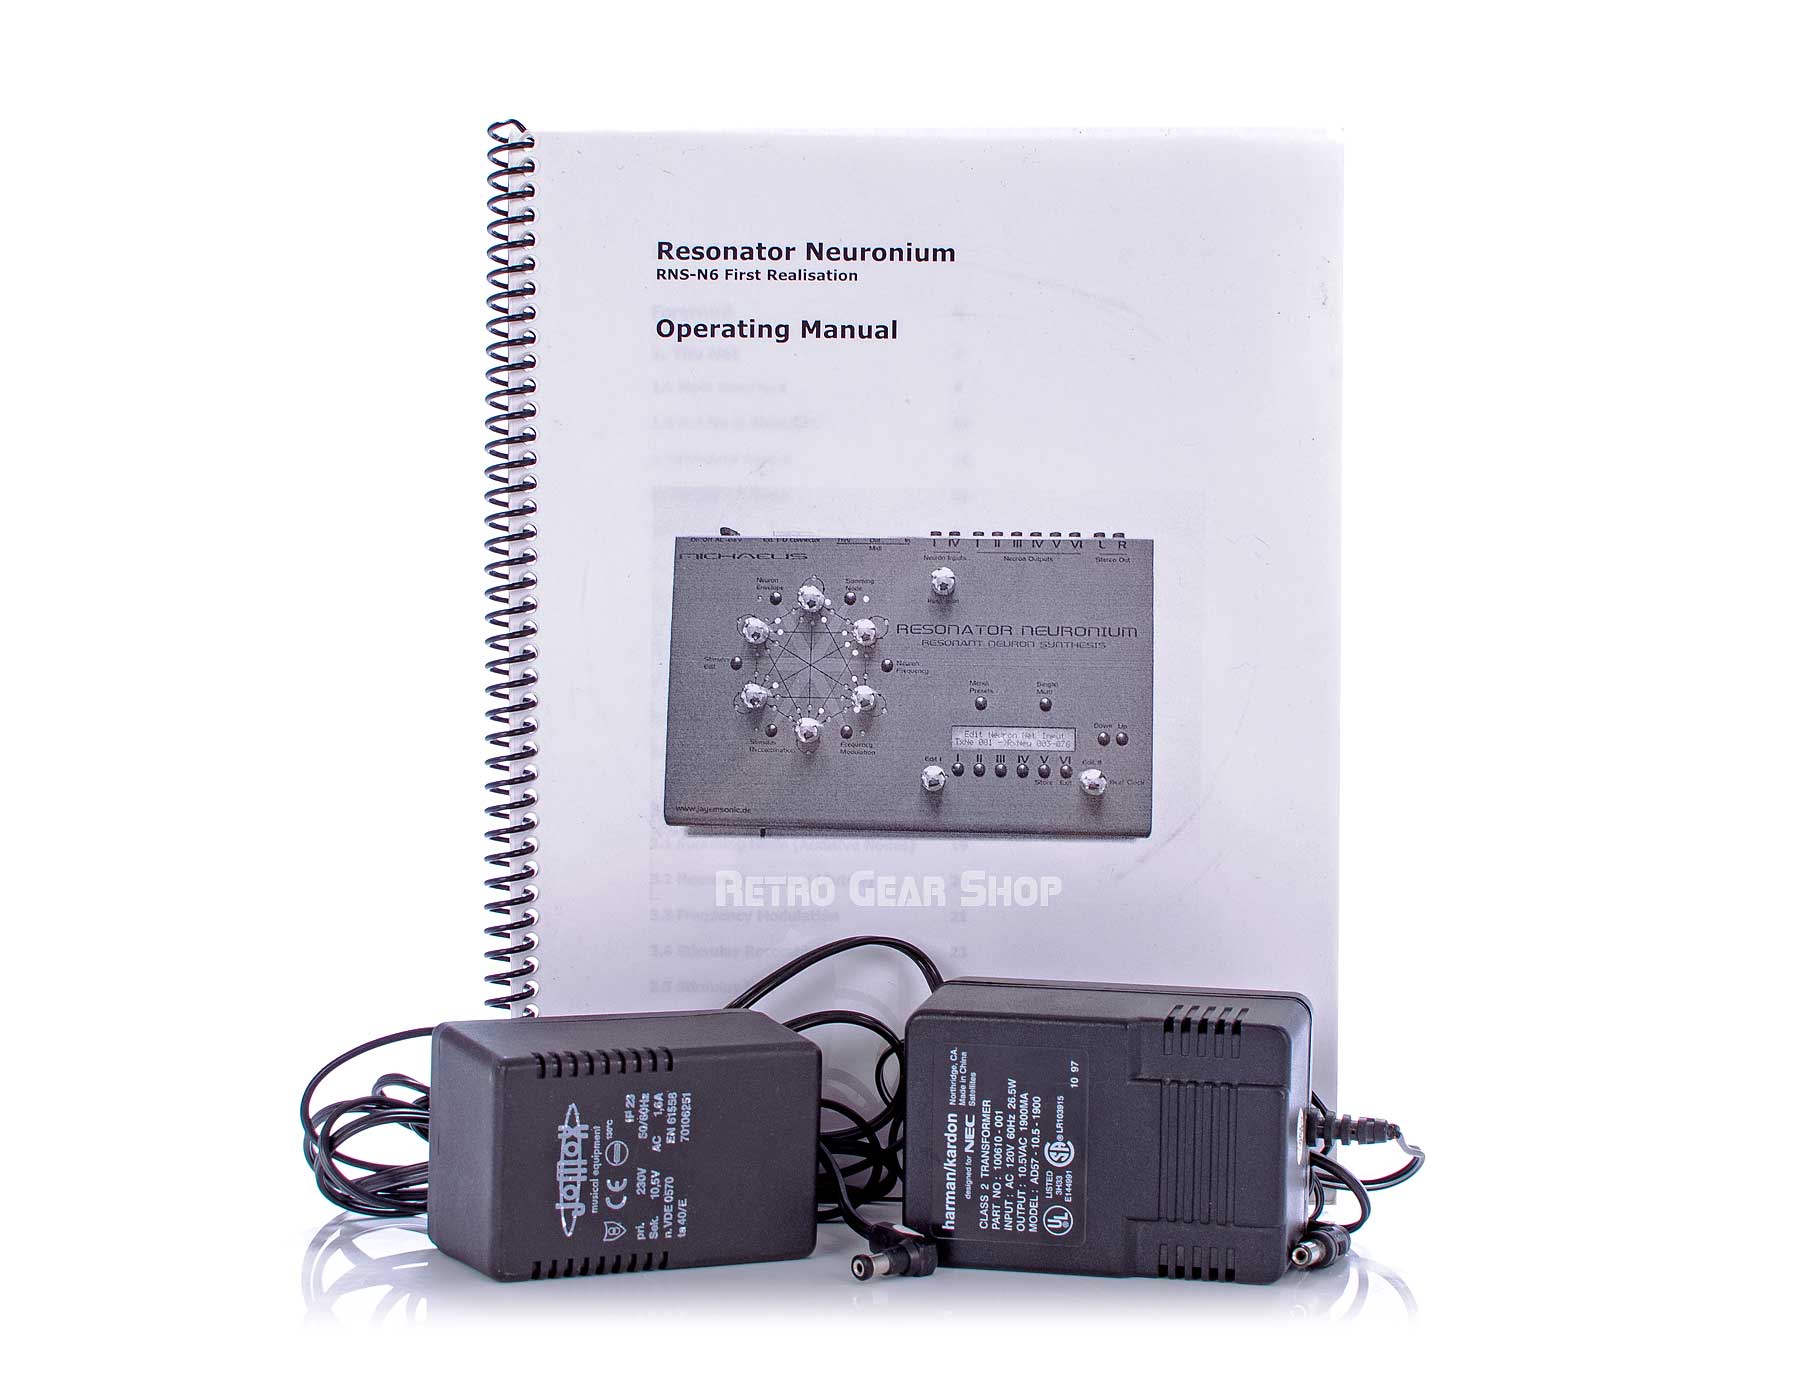 JoMox Resonator Neuronium PSU Manual